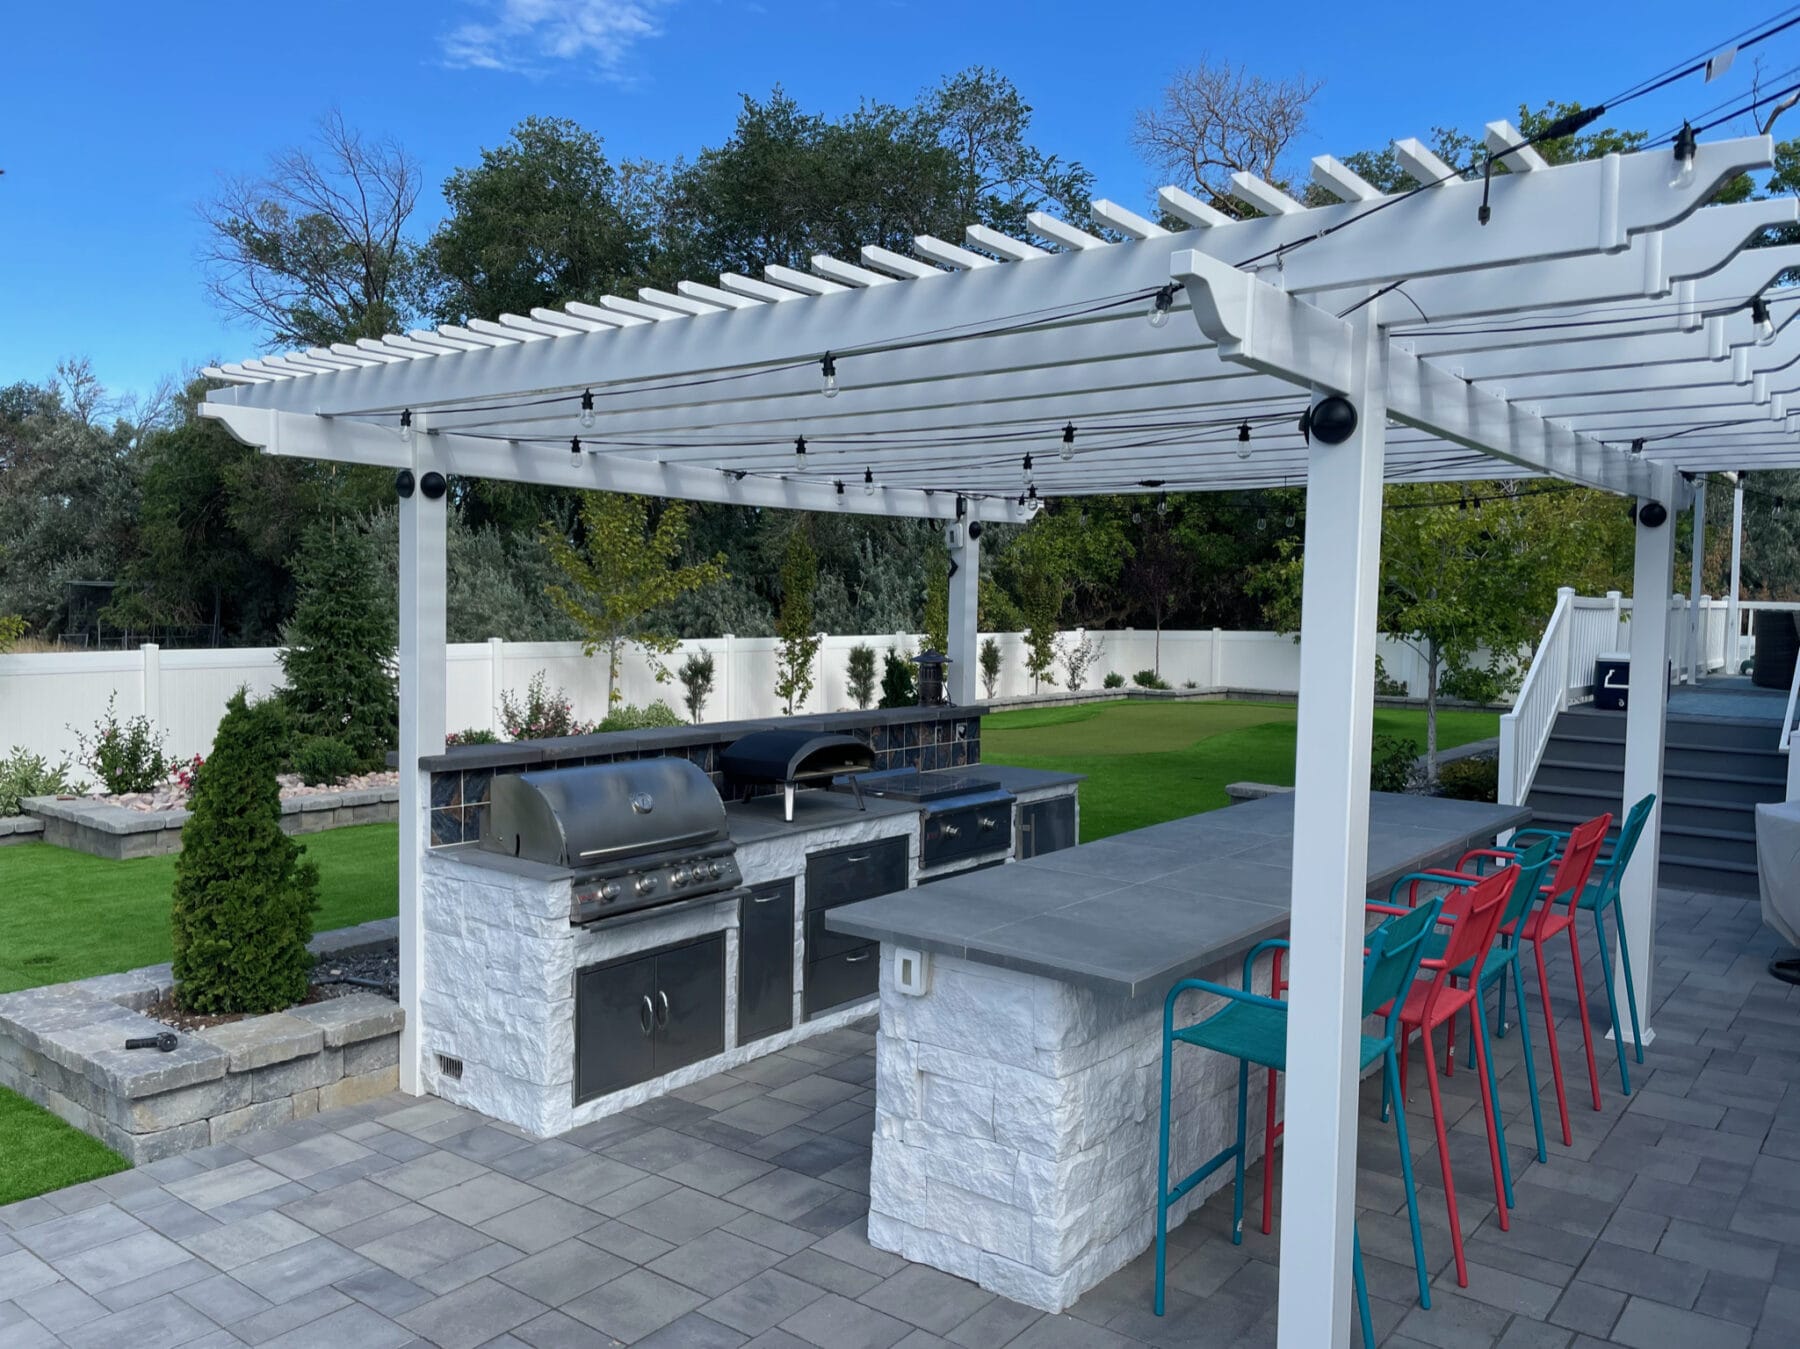 Custom outdoor kitchen, bar, pergola, and patio landscaping in Salt Lake City, Utah backyard - Stevenson Brothers Custom Pools